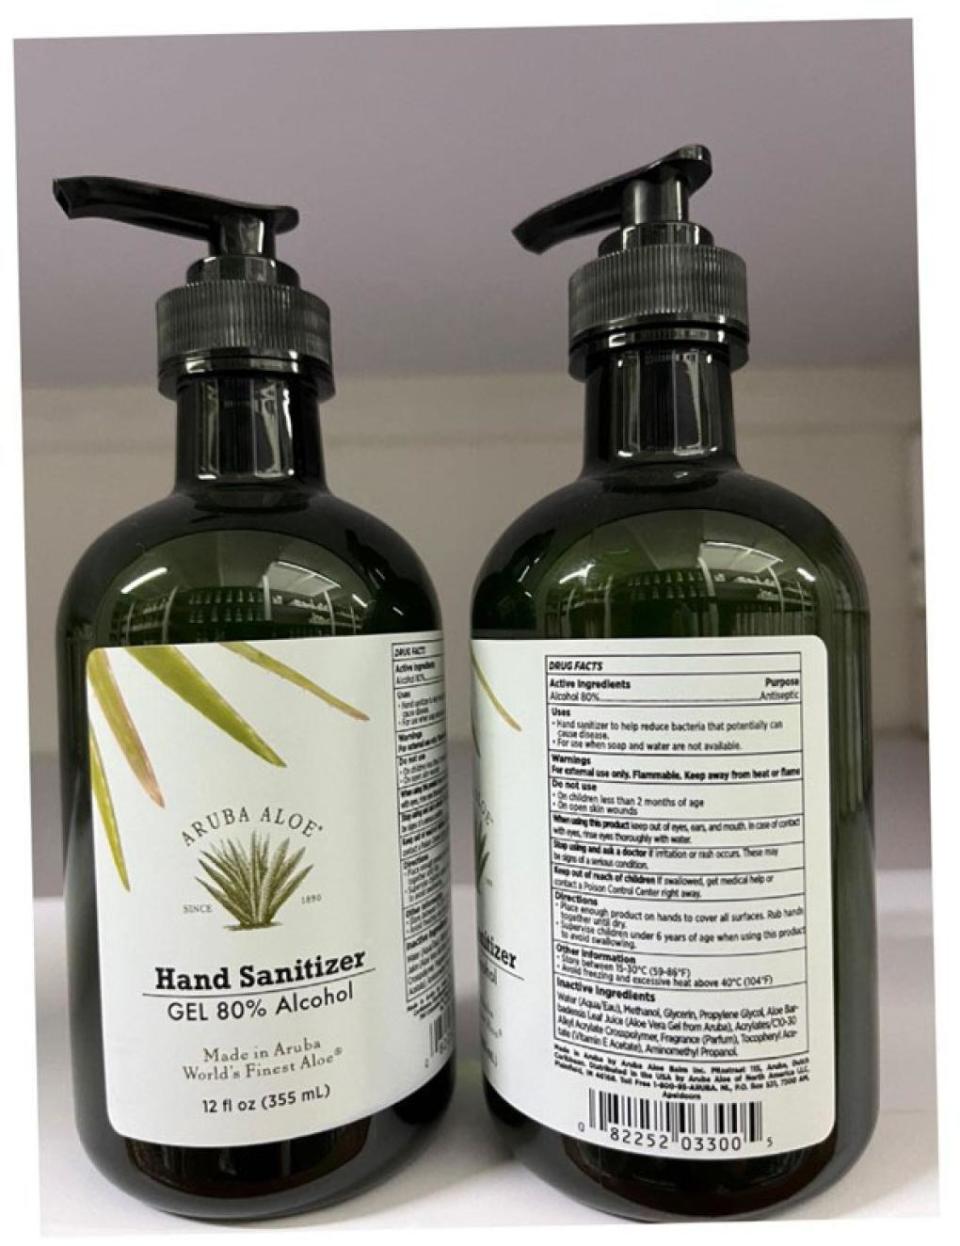 Image of recalled Aruba Aloe Hand Sanitizer Gel 80% Alcohol. / Credit: Food and Drug Administration